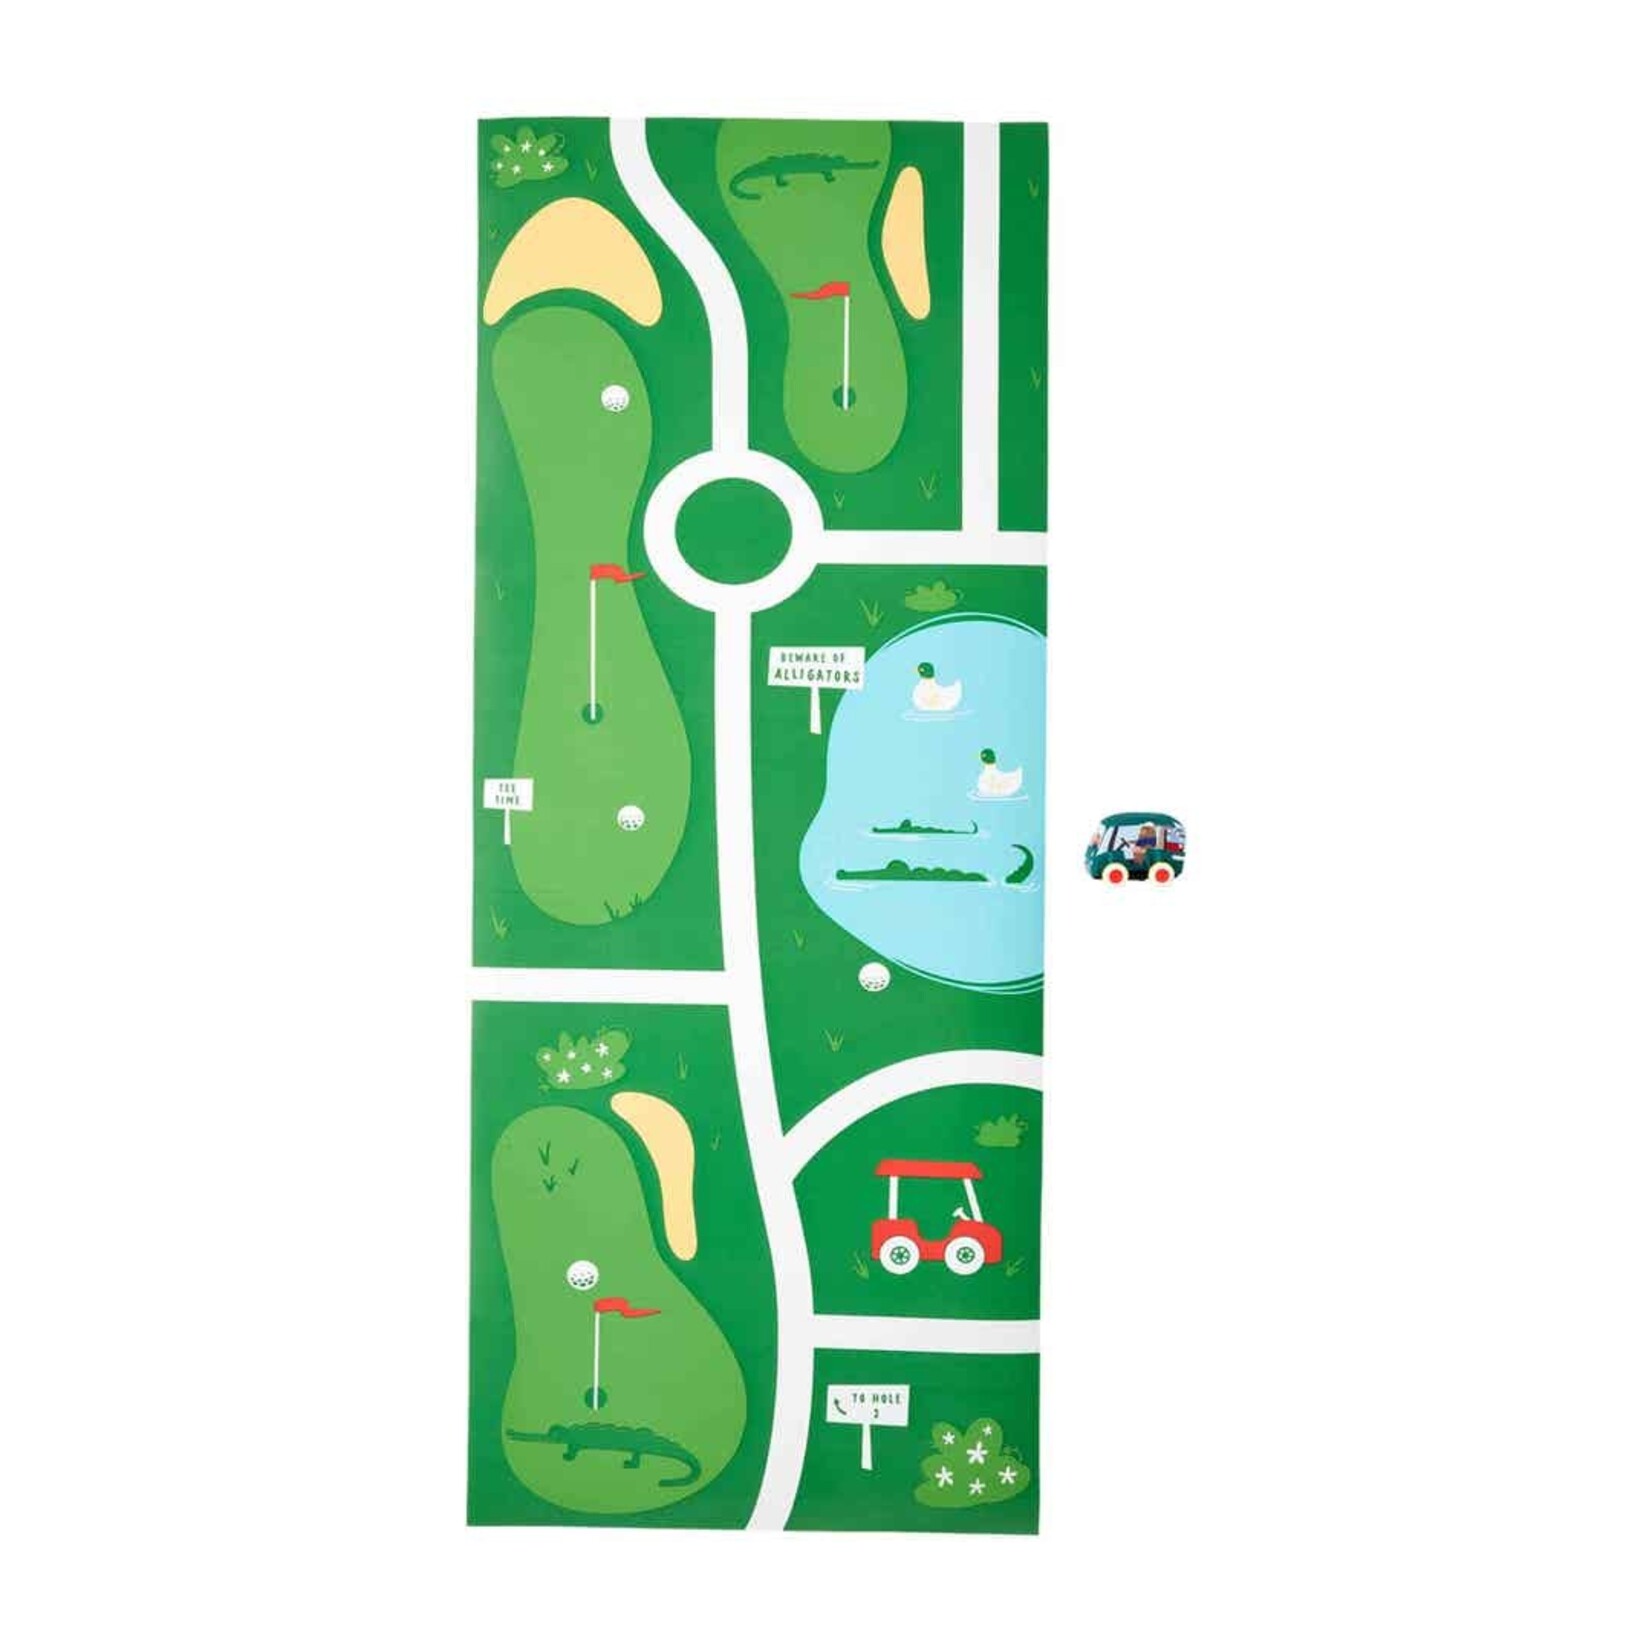 Mudpie Golf Cart w/ Golf Course Map